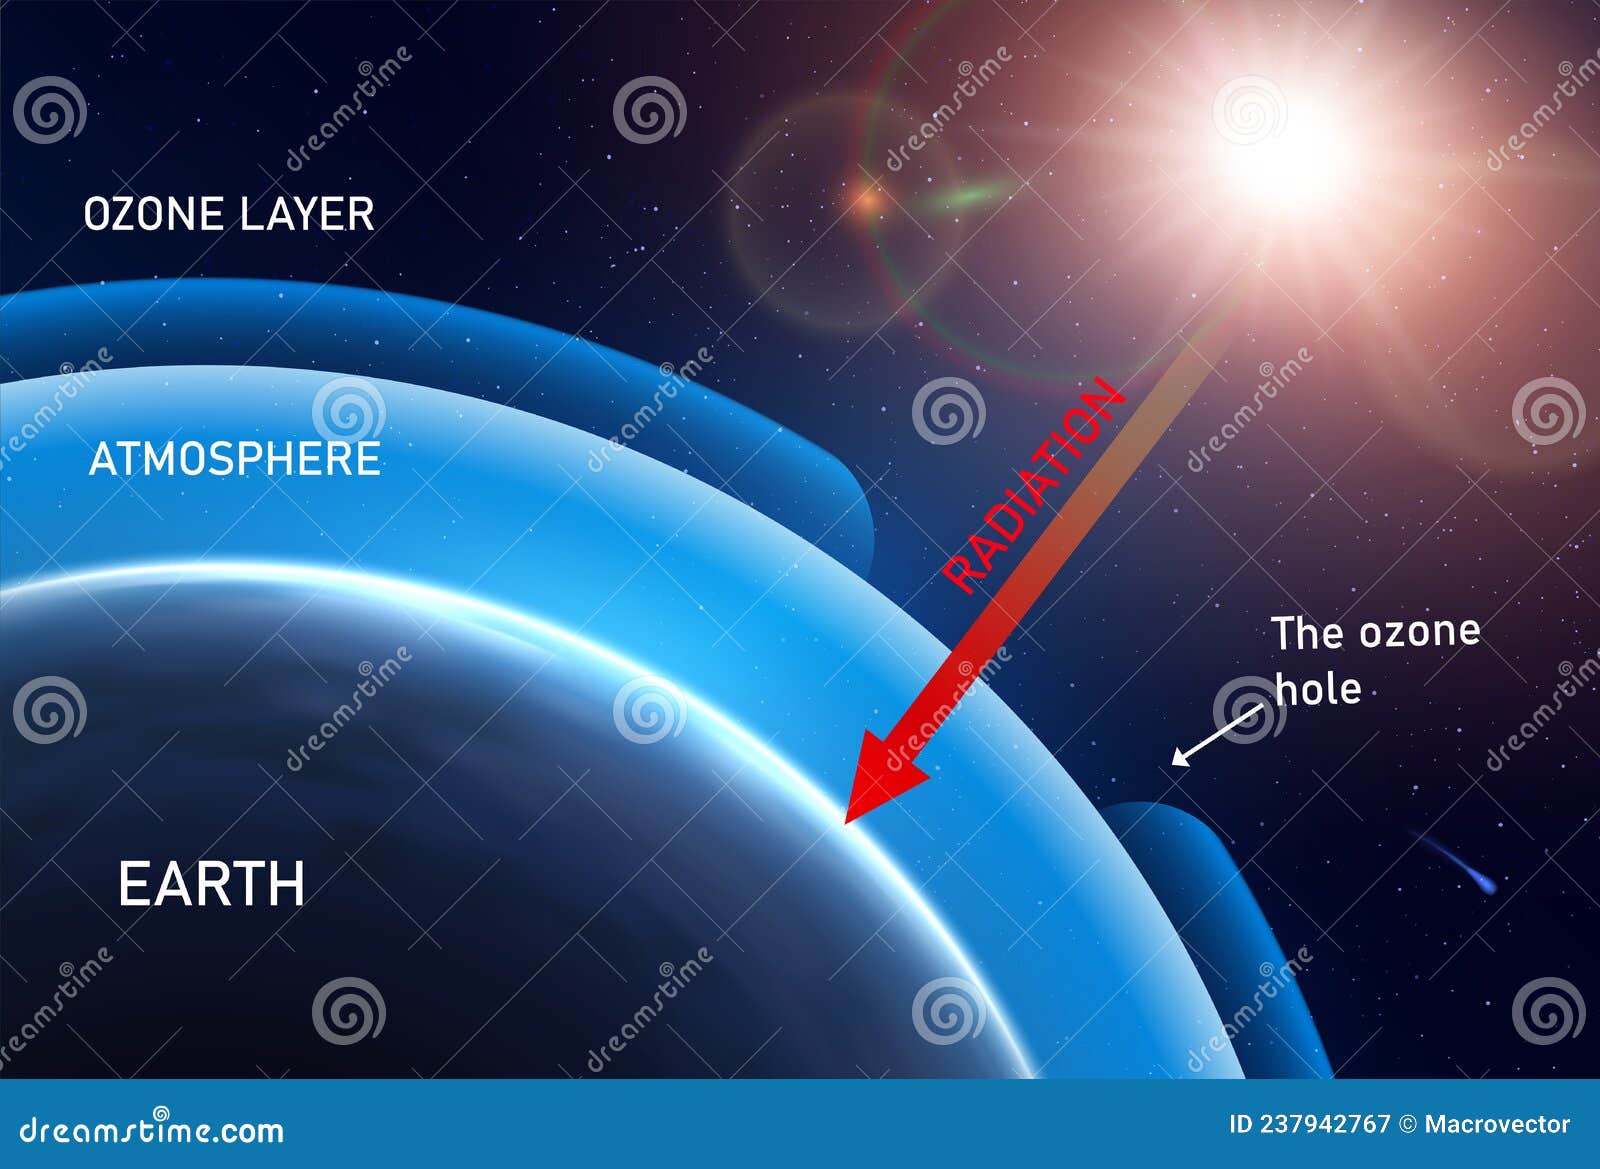 ozone layer realistic infographics